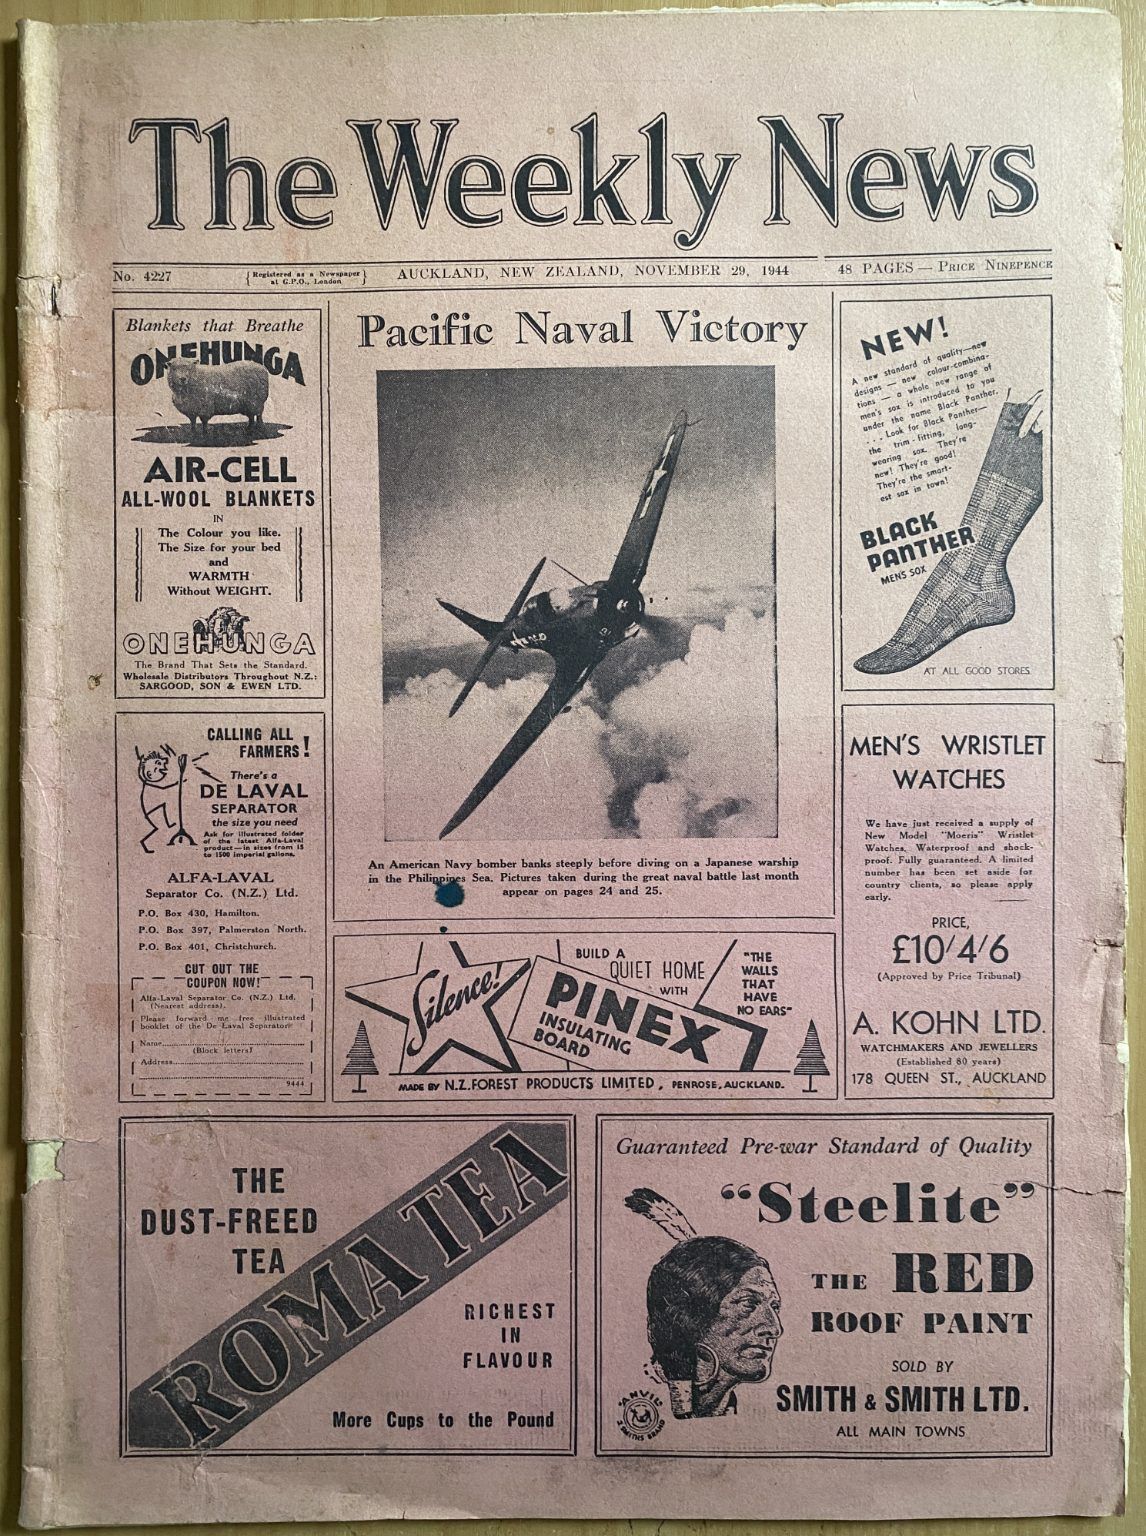 OLD NEWSPAPER: The Weekly News - No. 4227, 29 November 1944